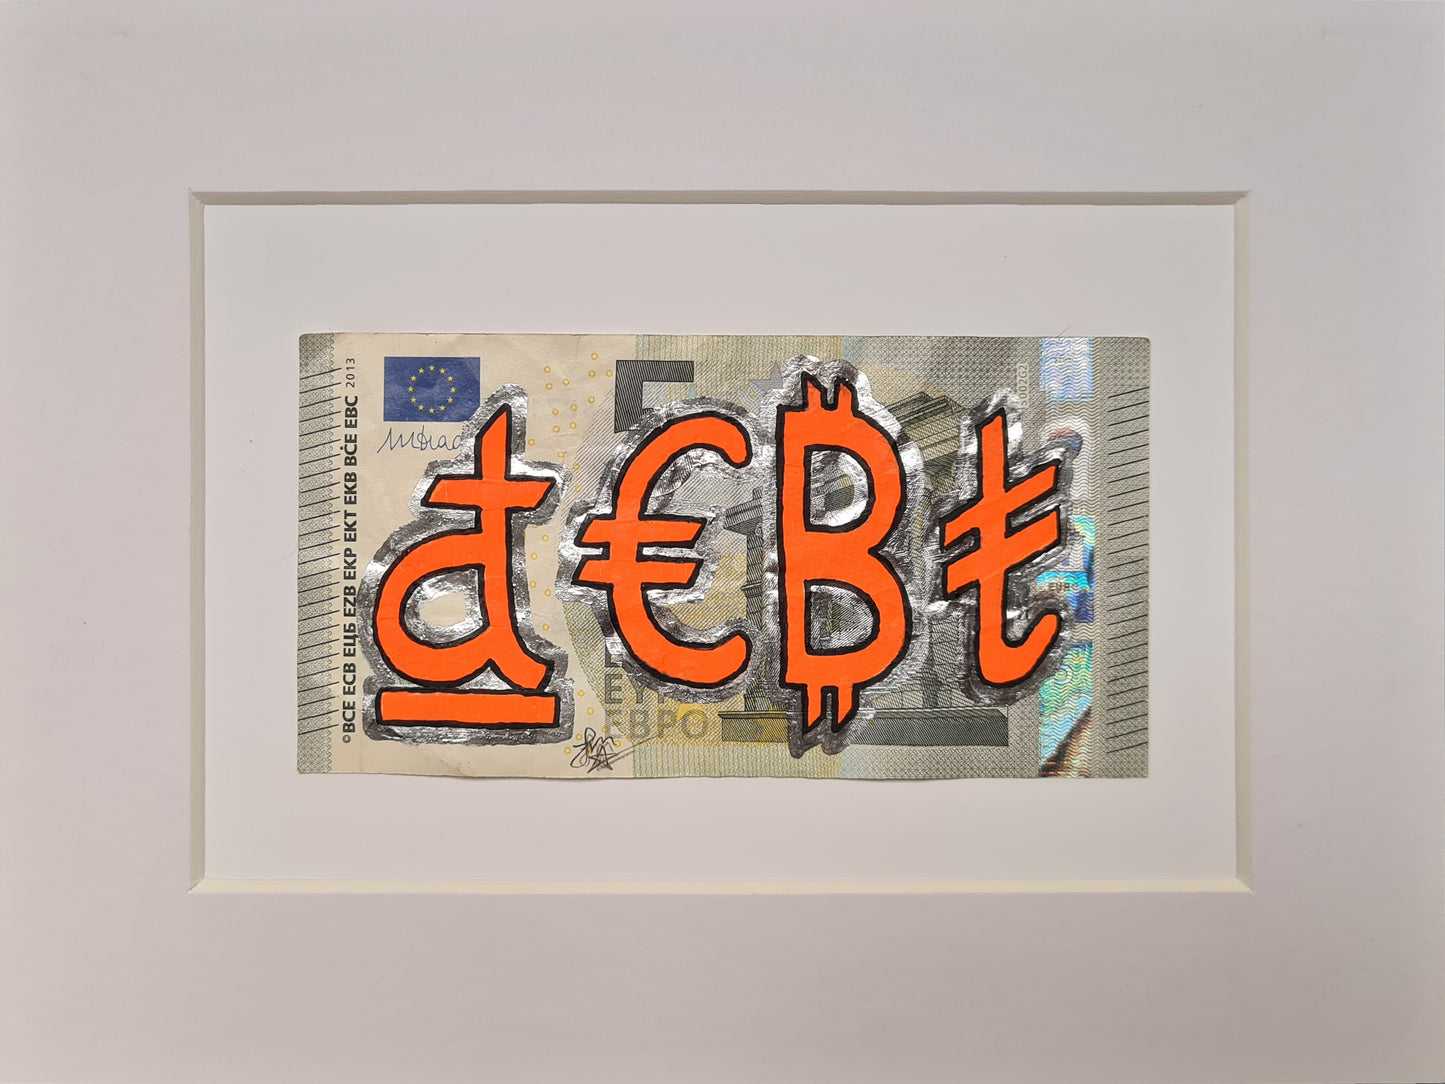 Debt (Euro Fiver) - Art on genuine banknote